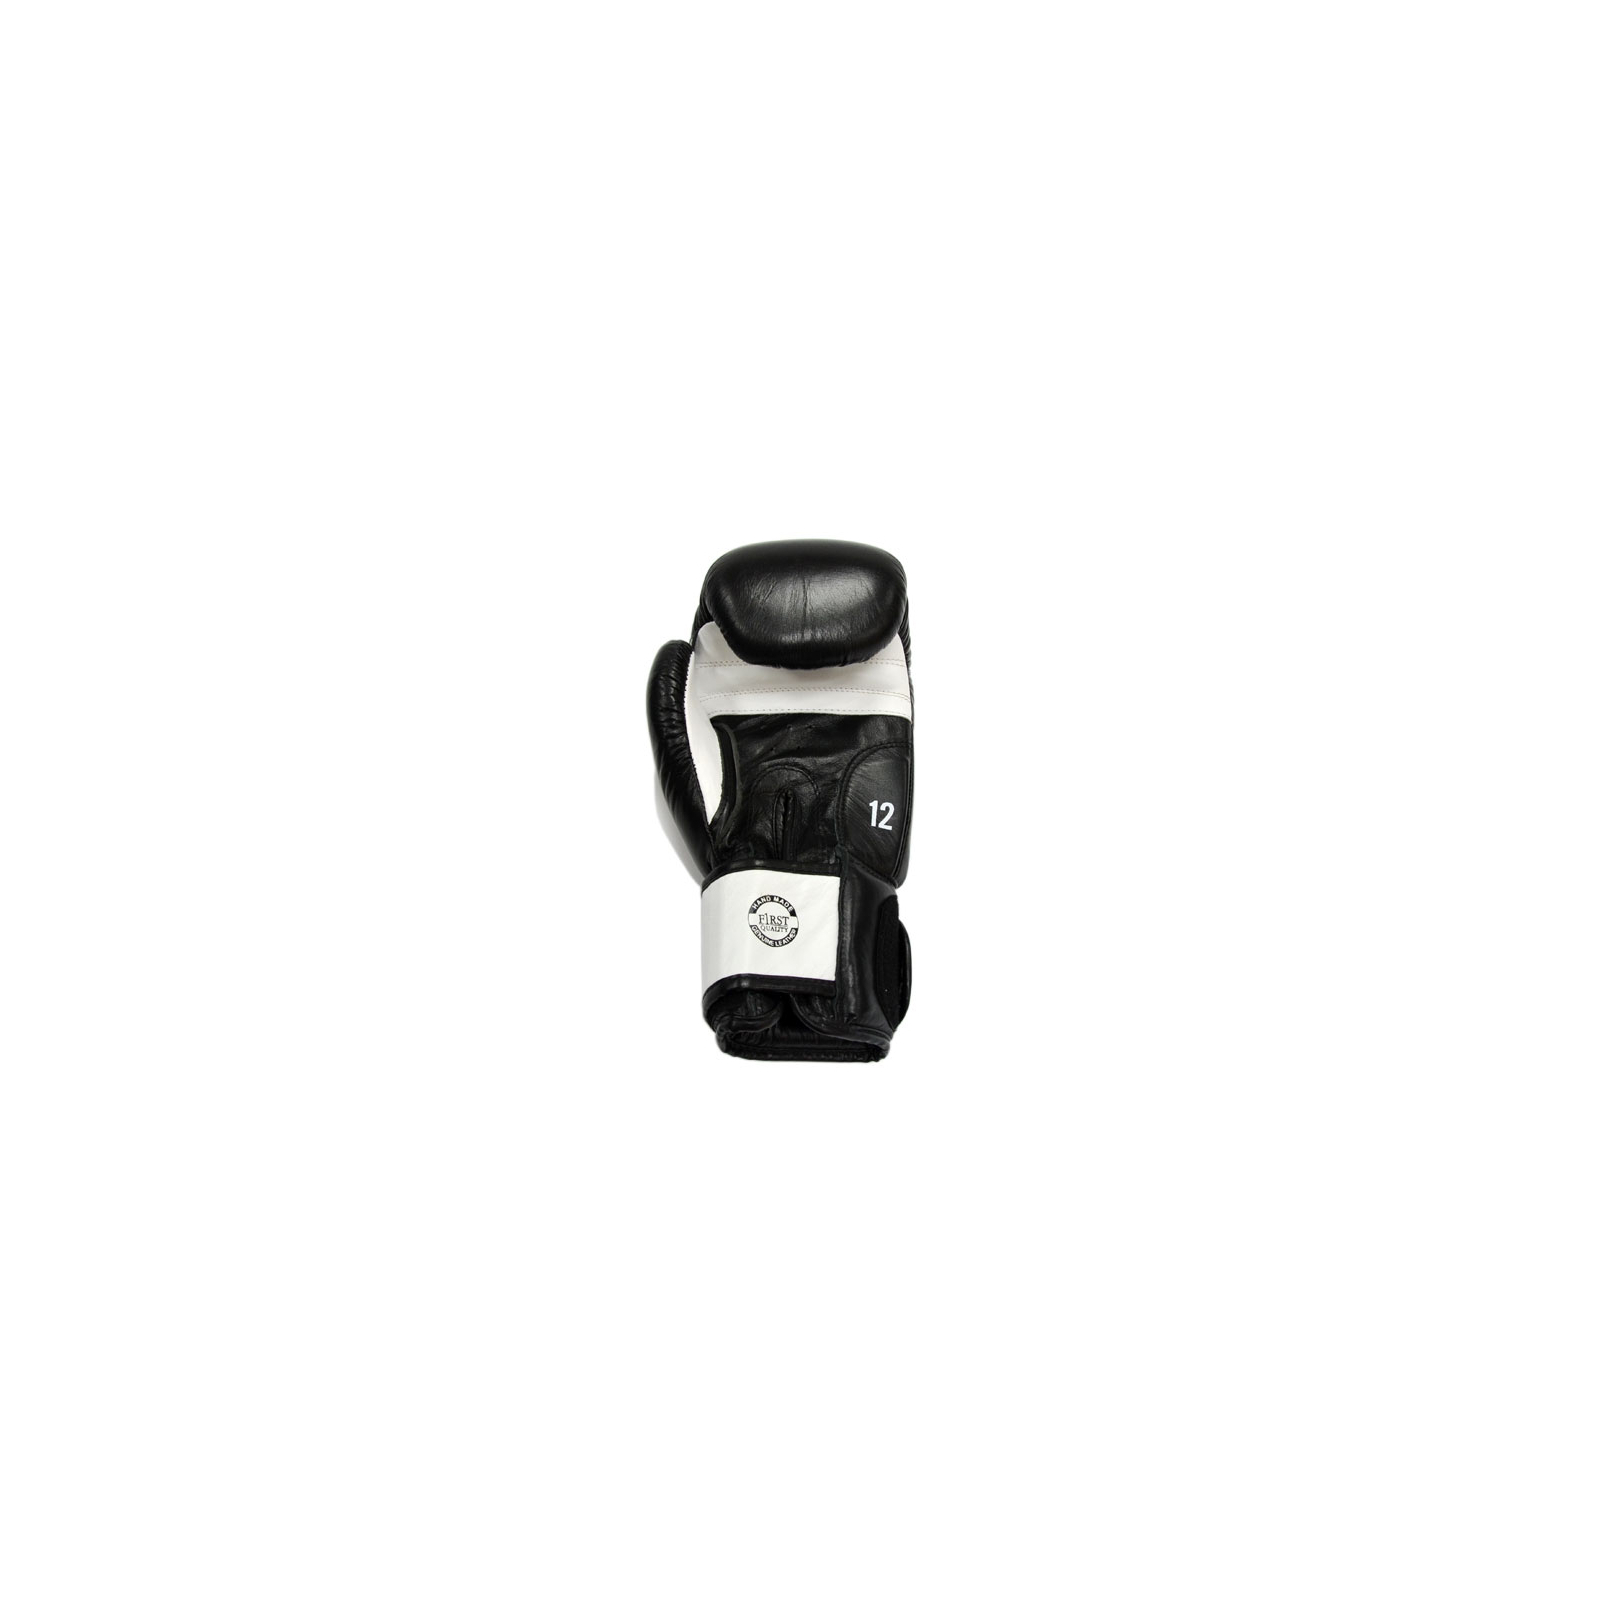 Боксерские перчатки Thor Sparring PU-шкіра 16oz Чорно-білі (558(PU) BLK/WH 16 oz.) изображение 3